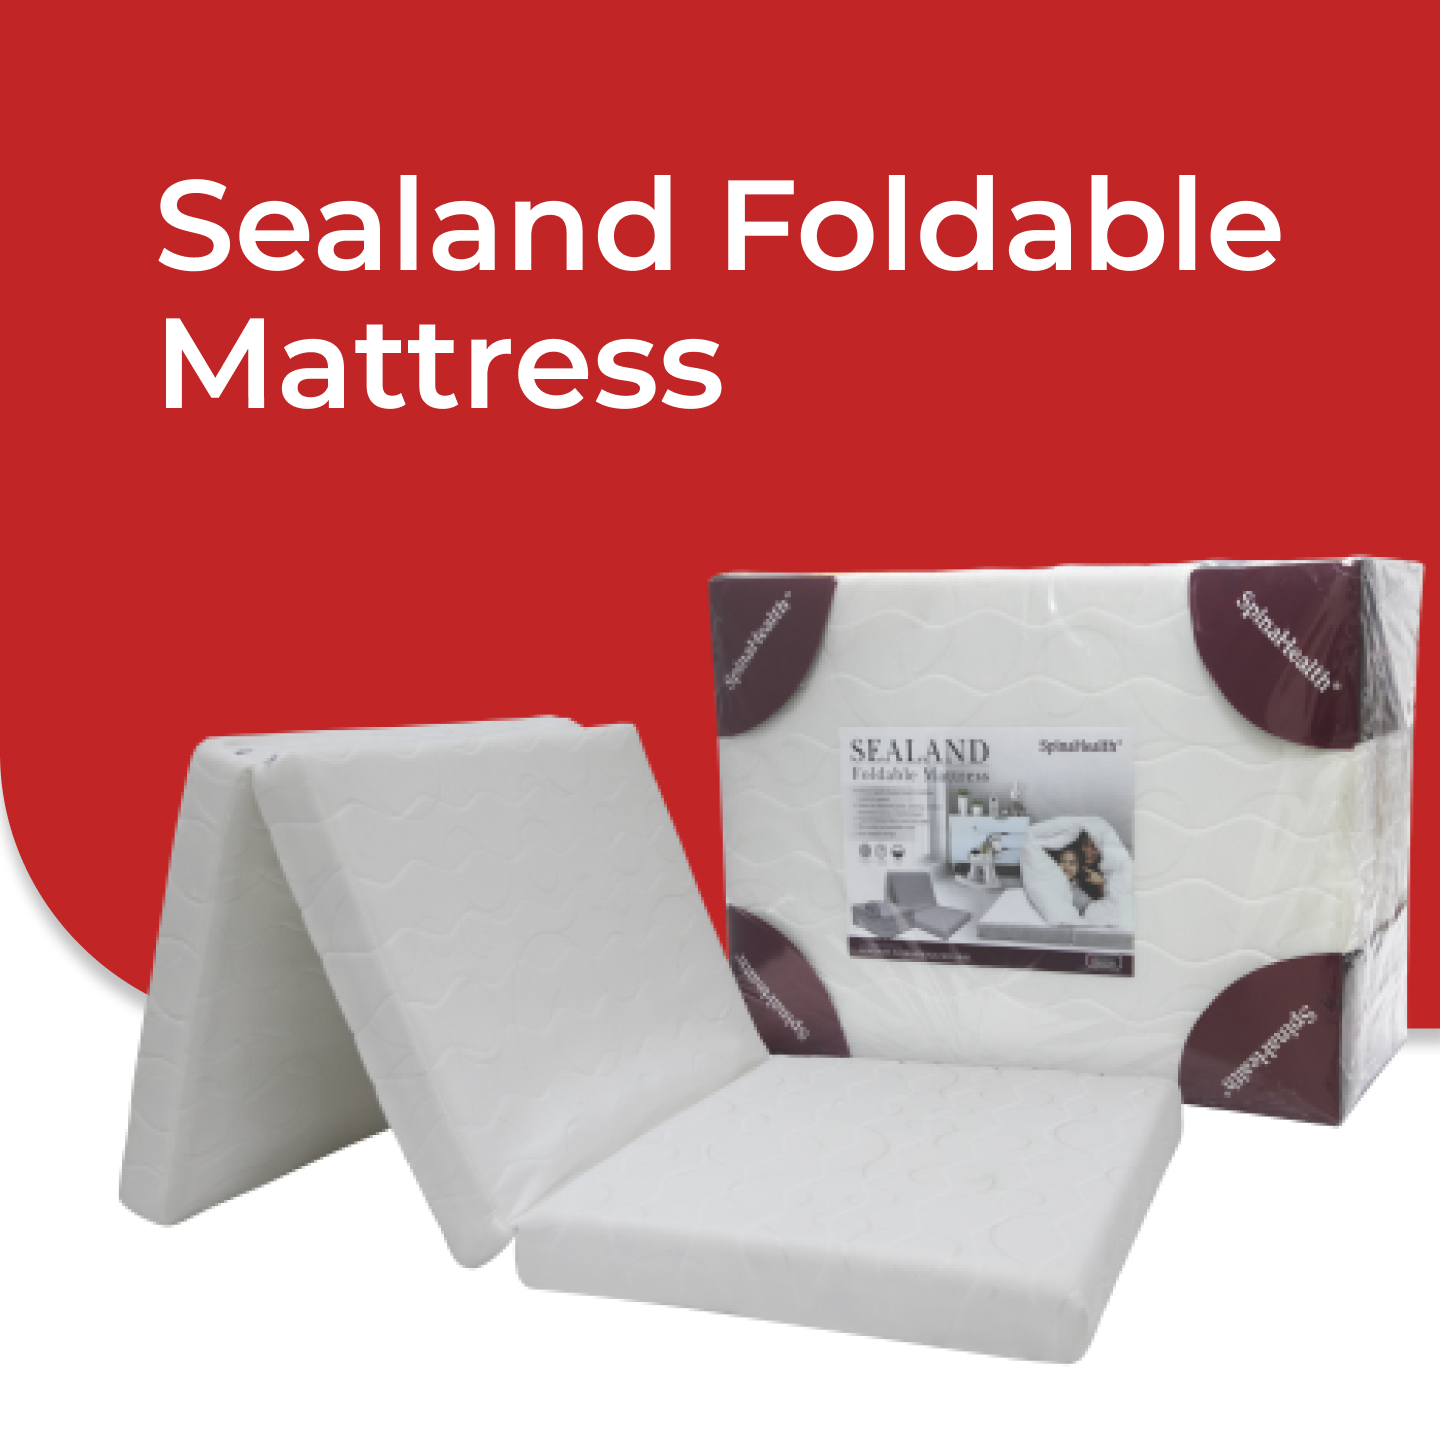 Sealand Foldable Mattress.jpg